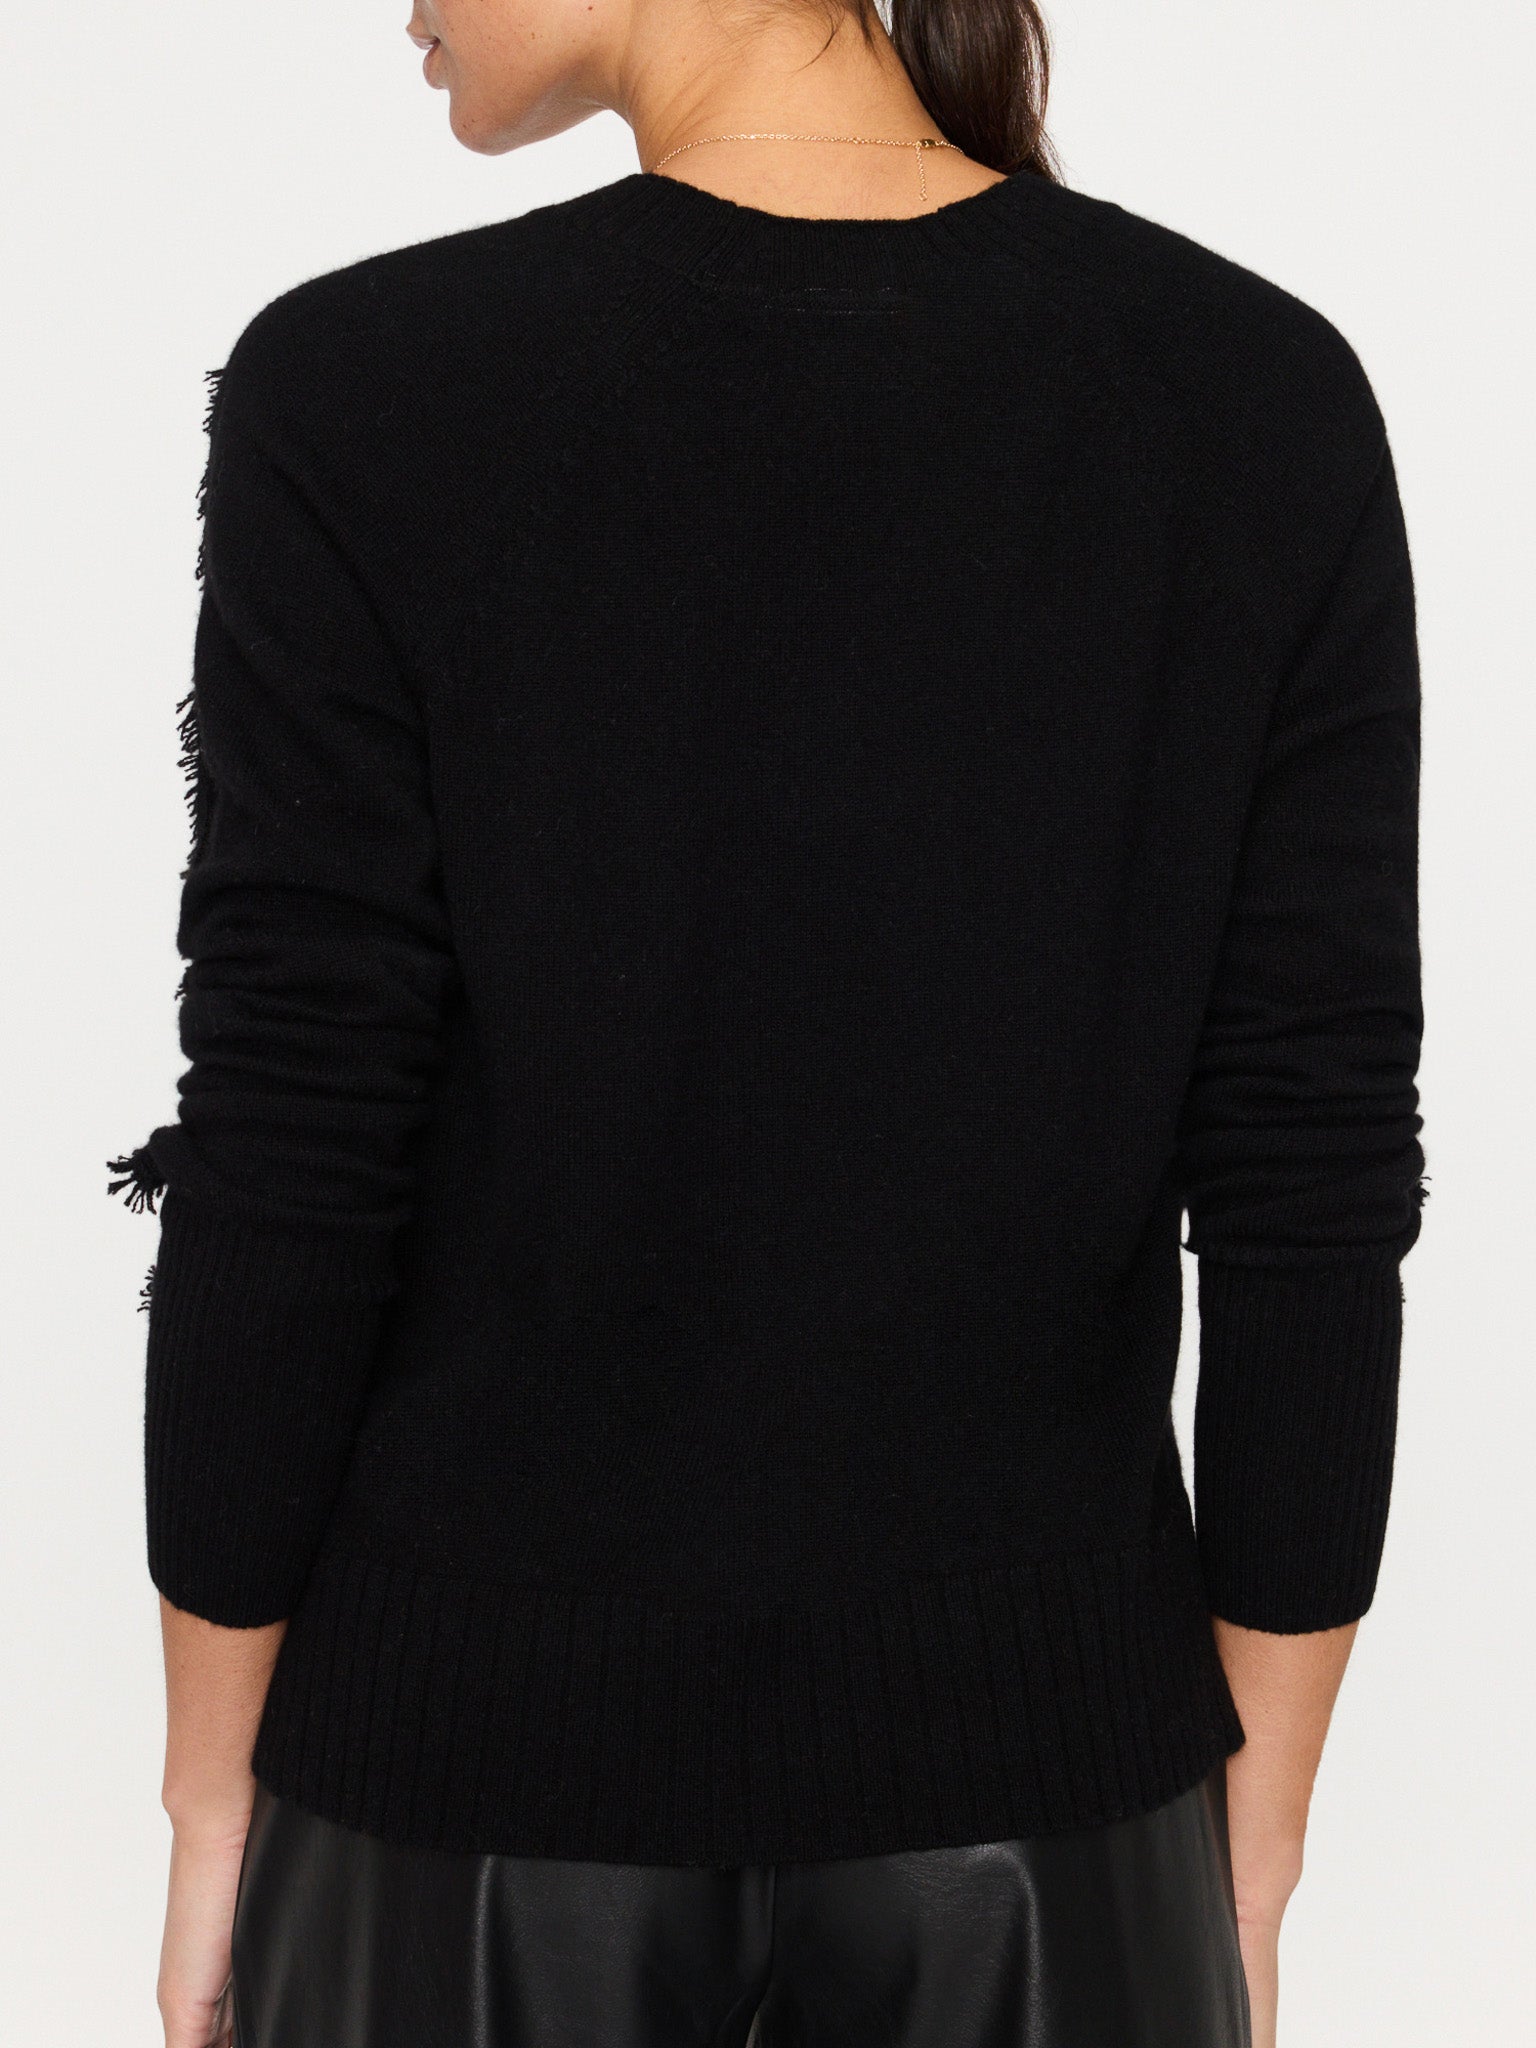 Jolie black layered v-neck sweater back view